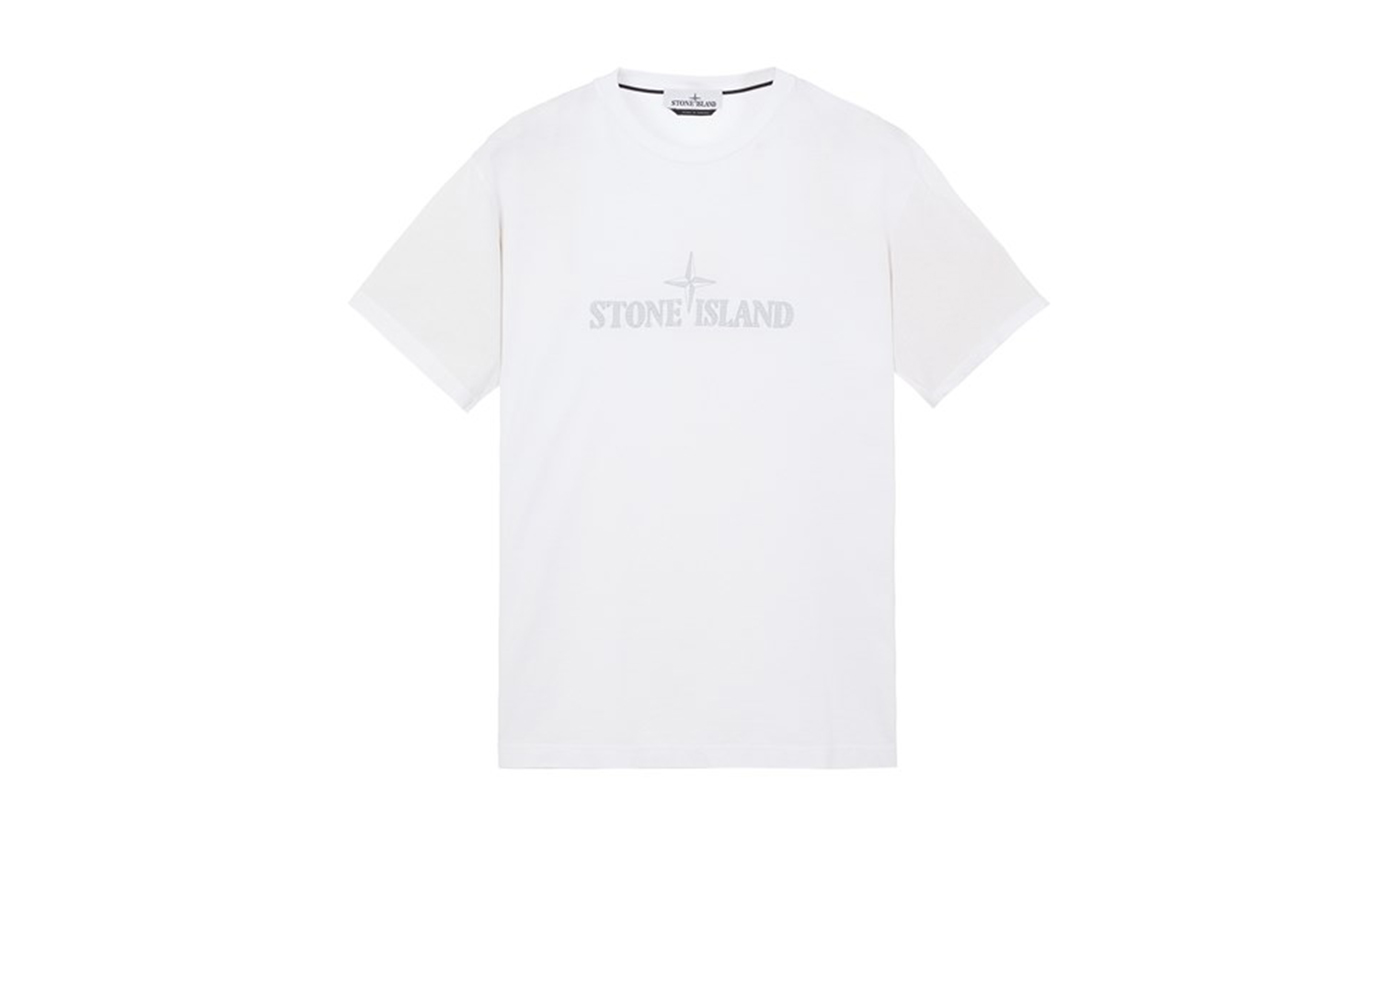 Stone Island 21579 Stitches Two Embroidery T-shirt White Men's